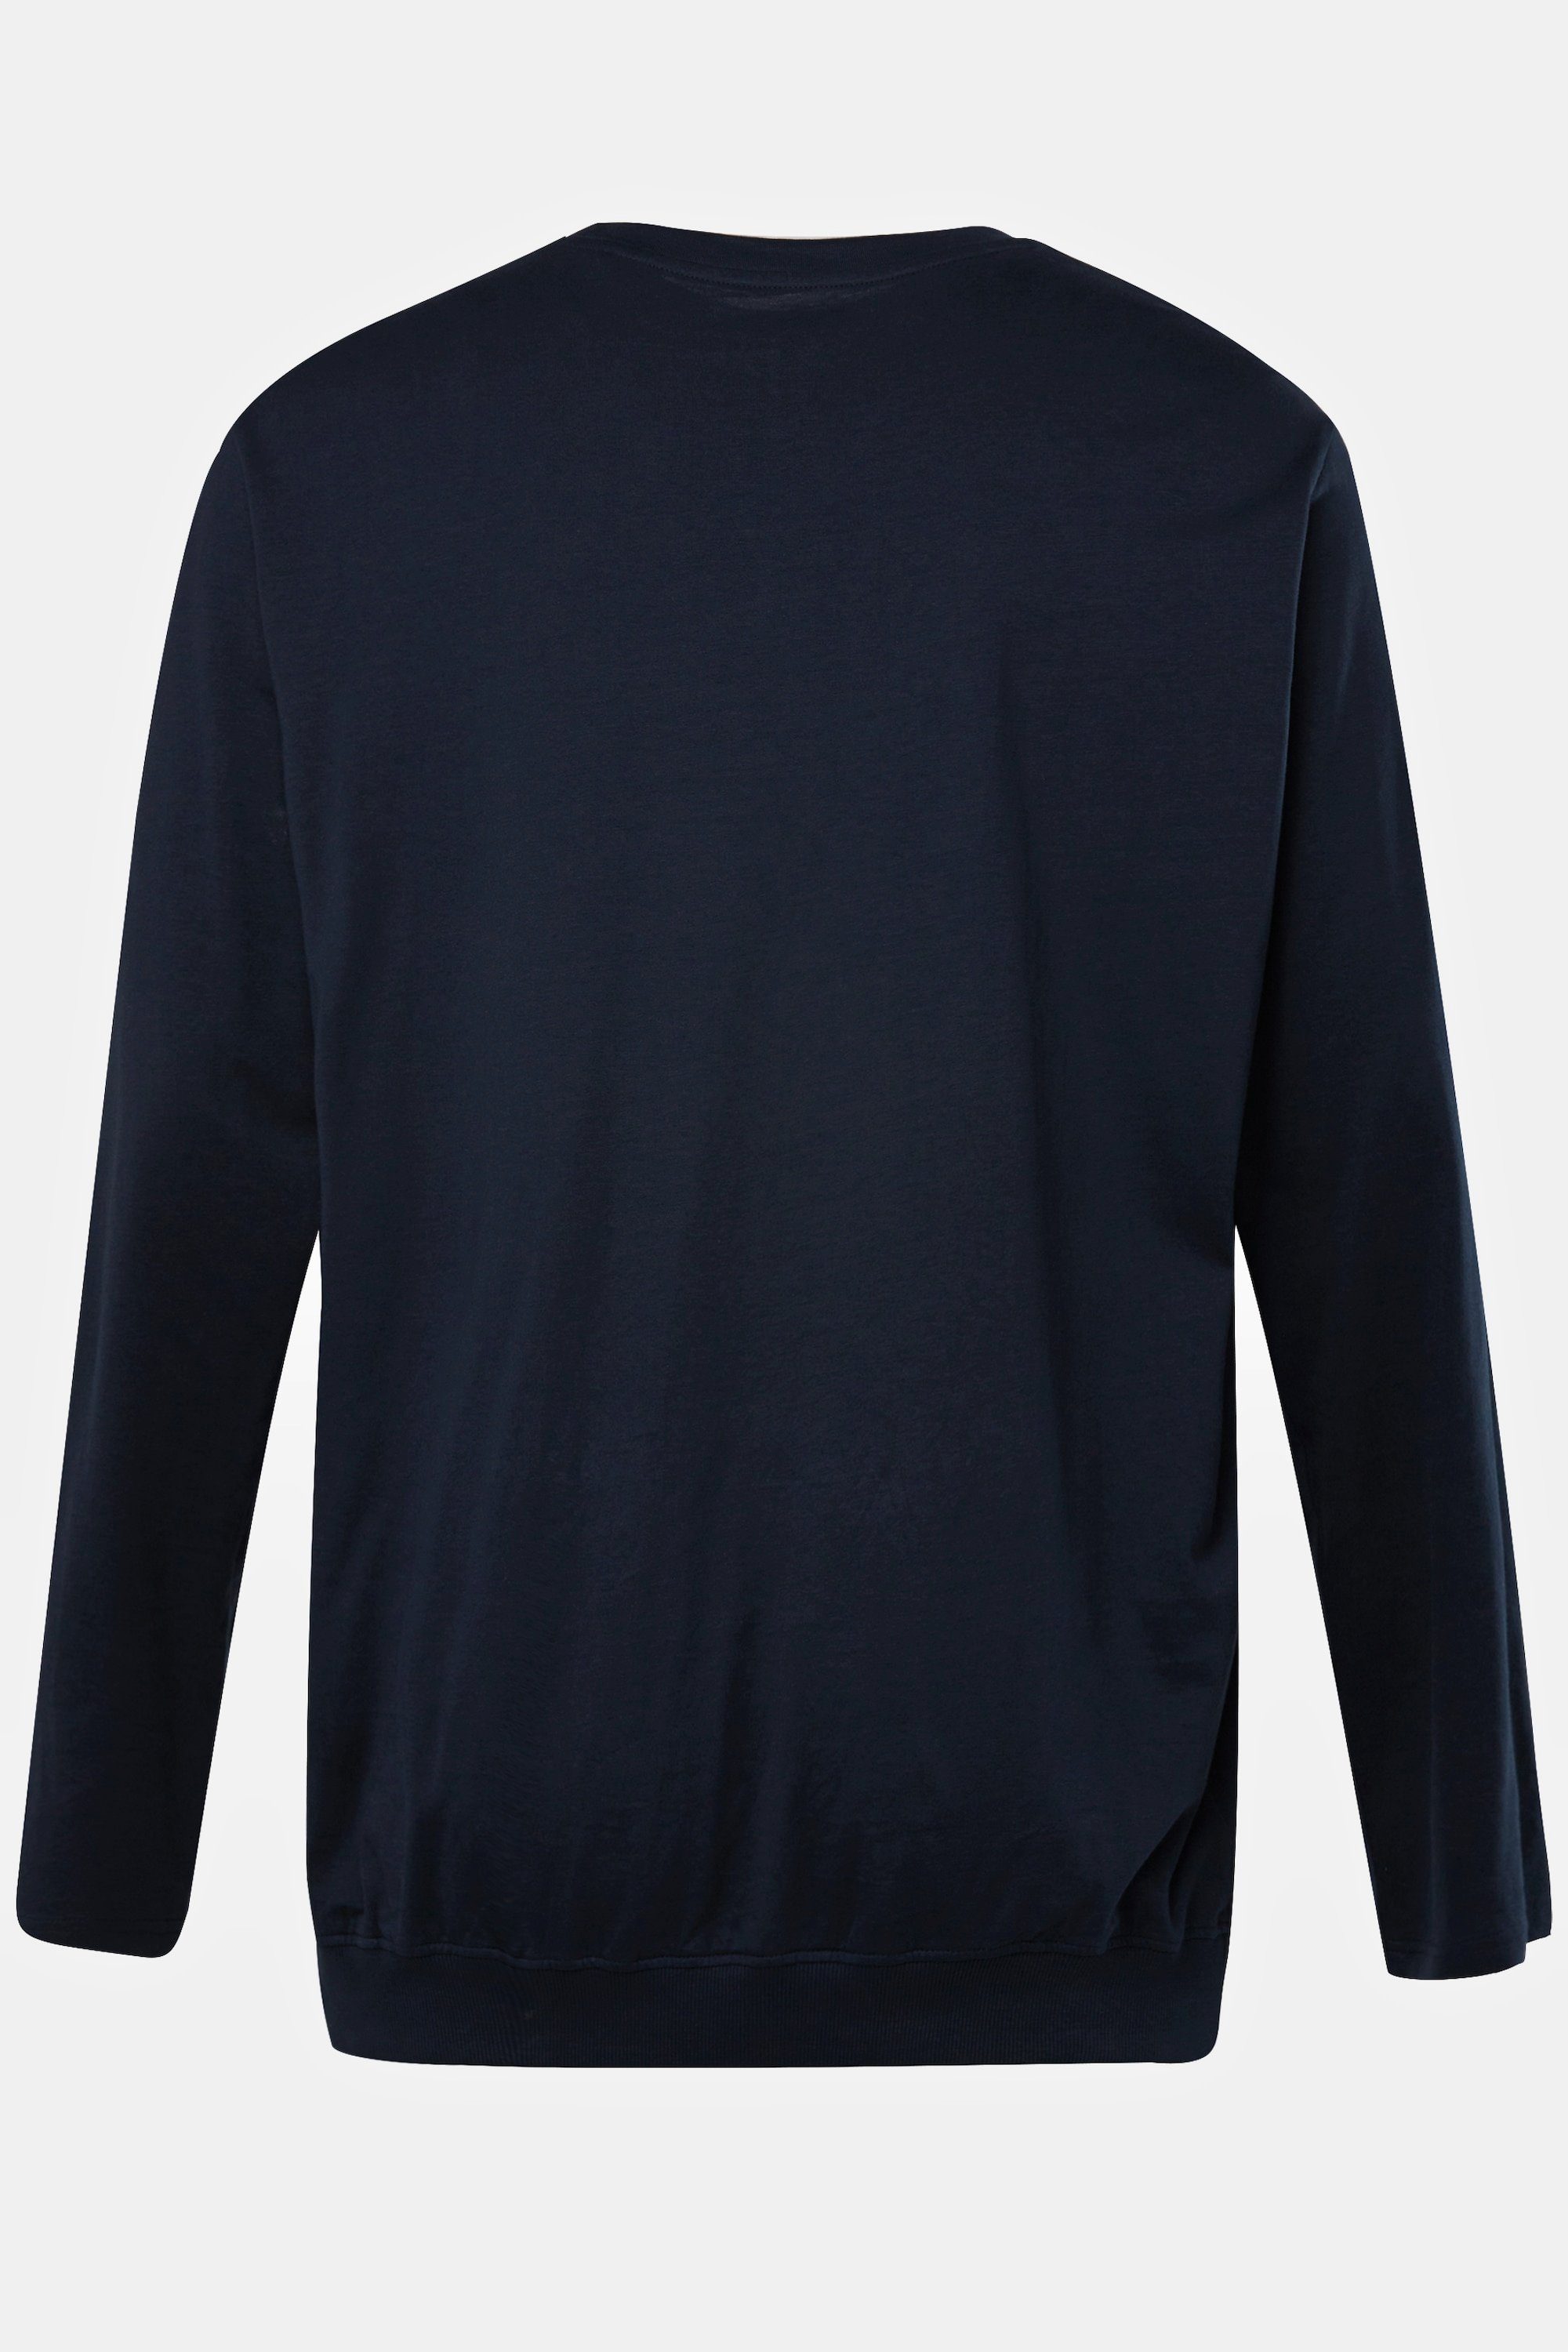 JP1880 T-Shirt 8 navy Langarmshirt bis XL Basic Rundhals blau Bauchfit